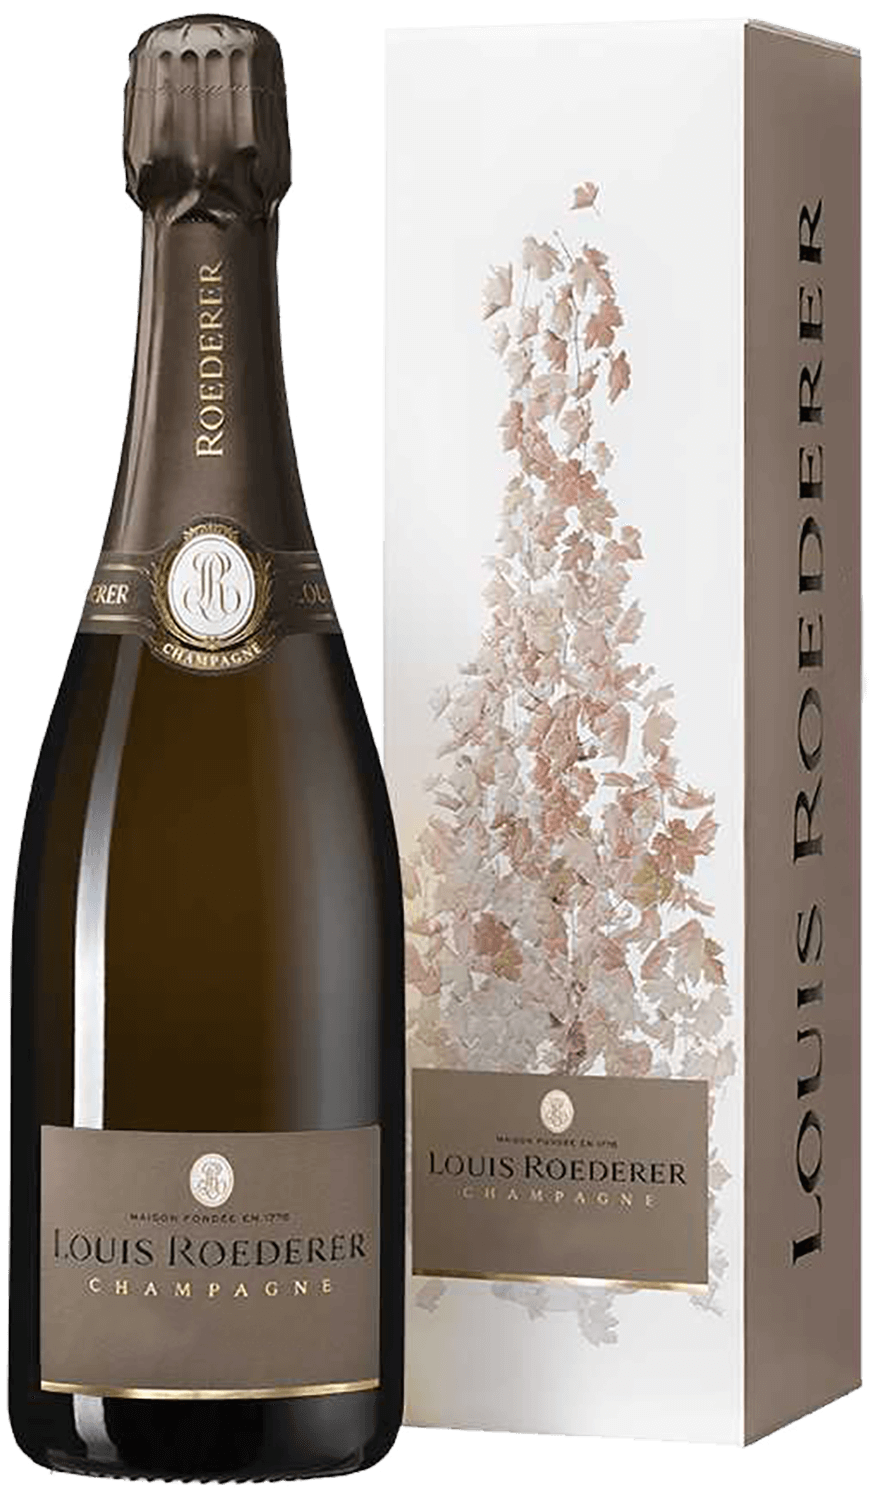 Vintage Brut Champagne AOC Louis Roederer (gift box) carte blanche champagne aoc louis roederer gift box